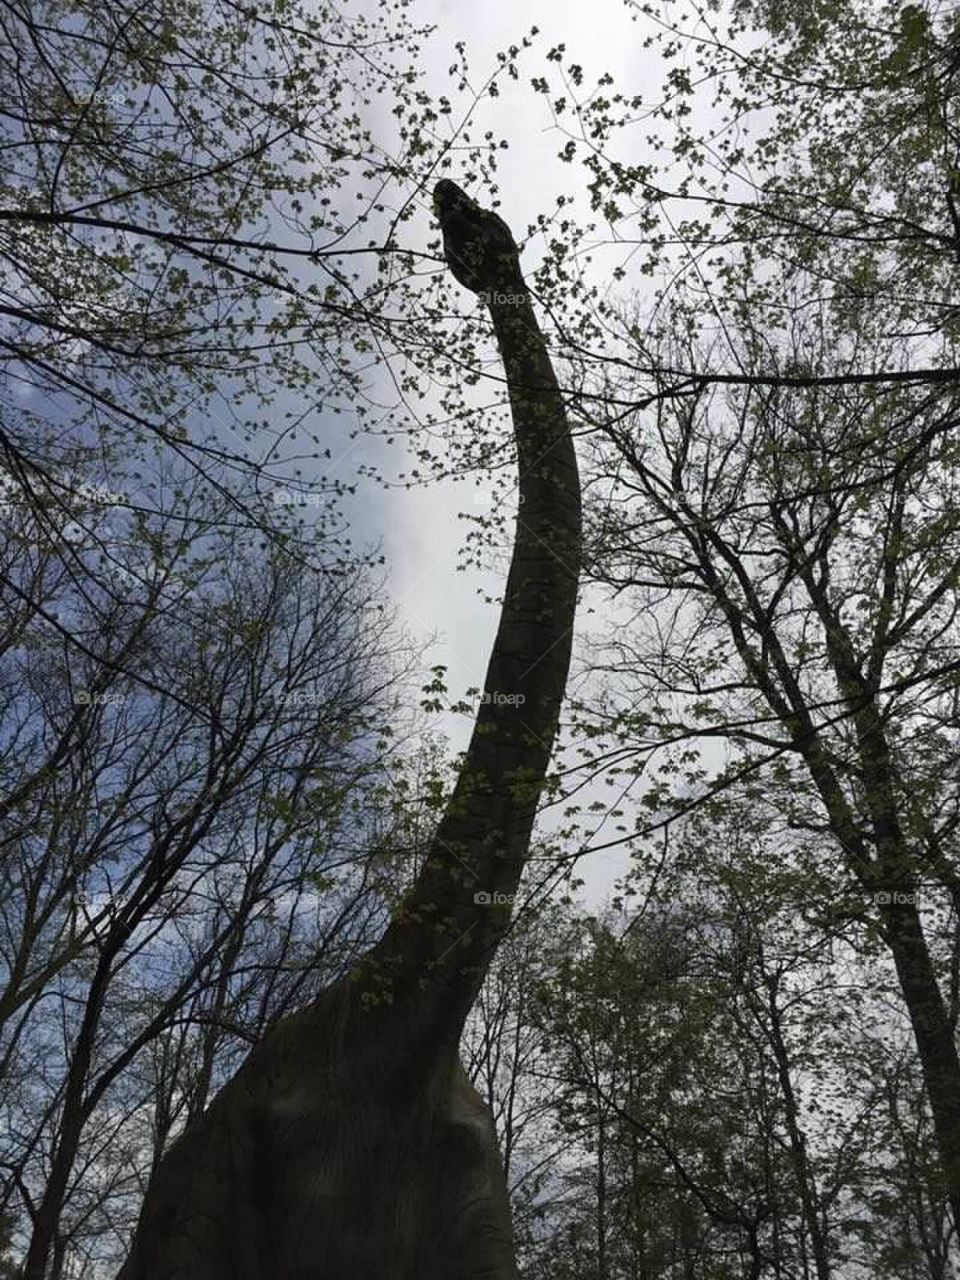 Dinosaur in the trees